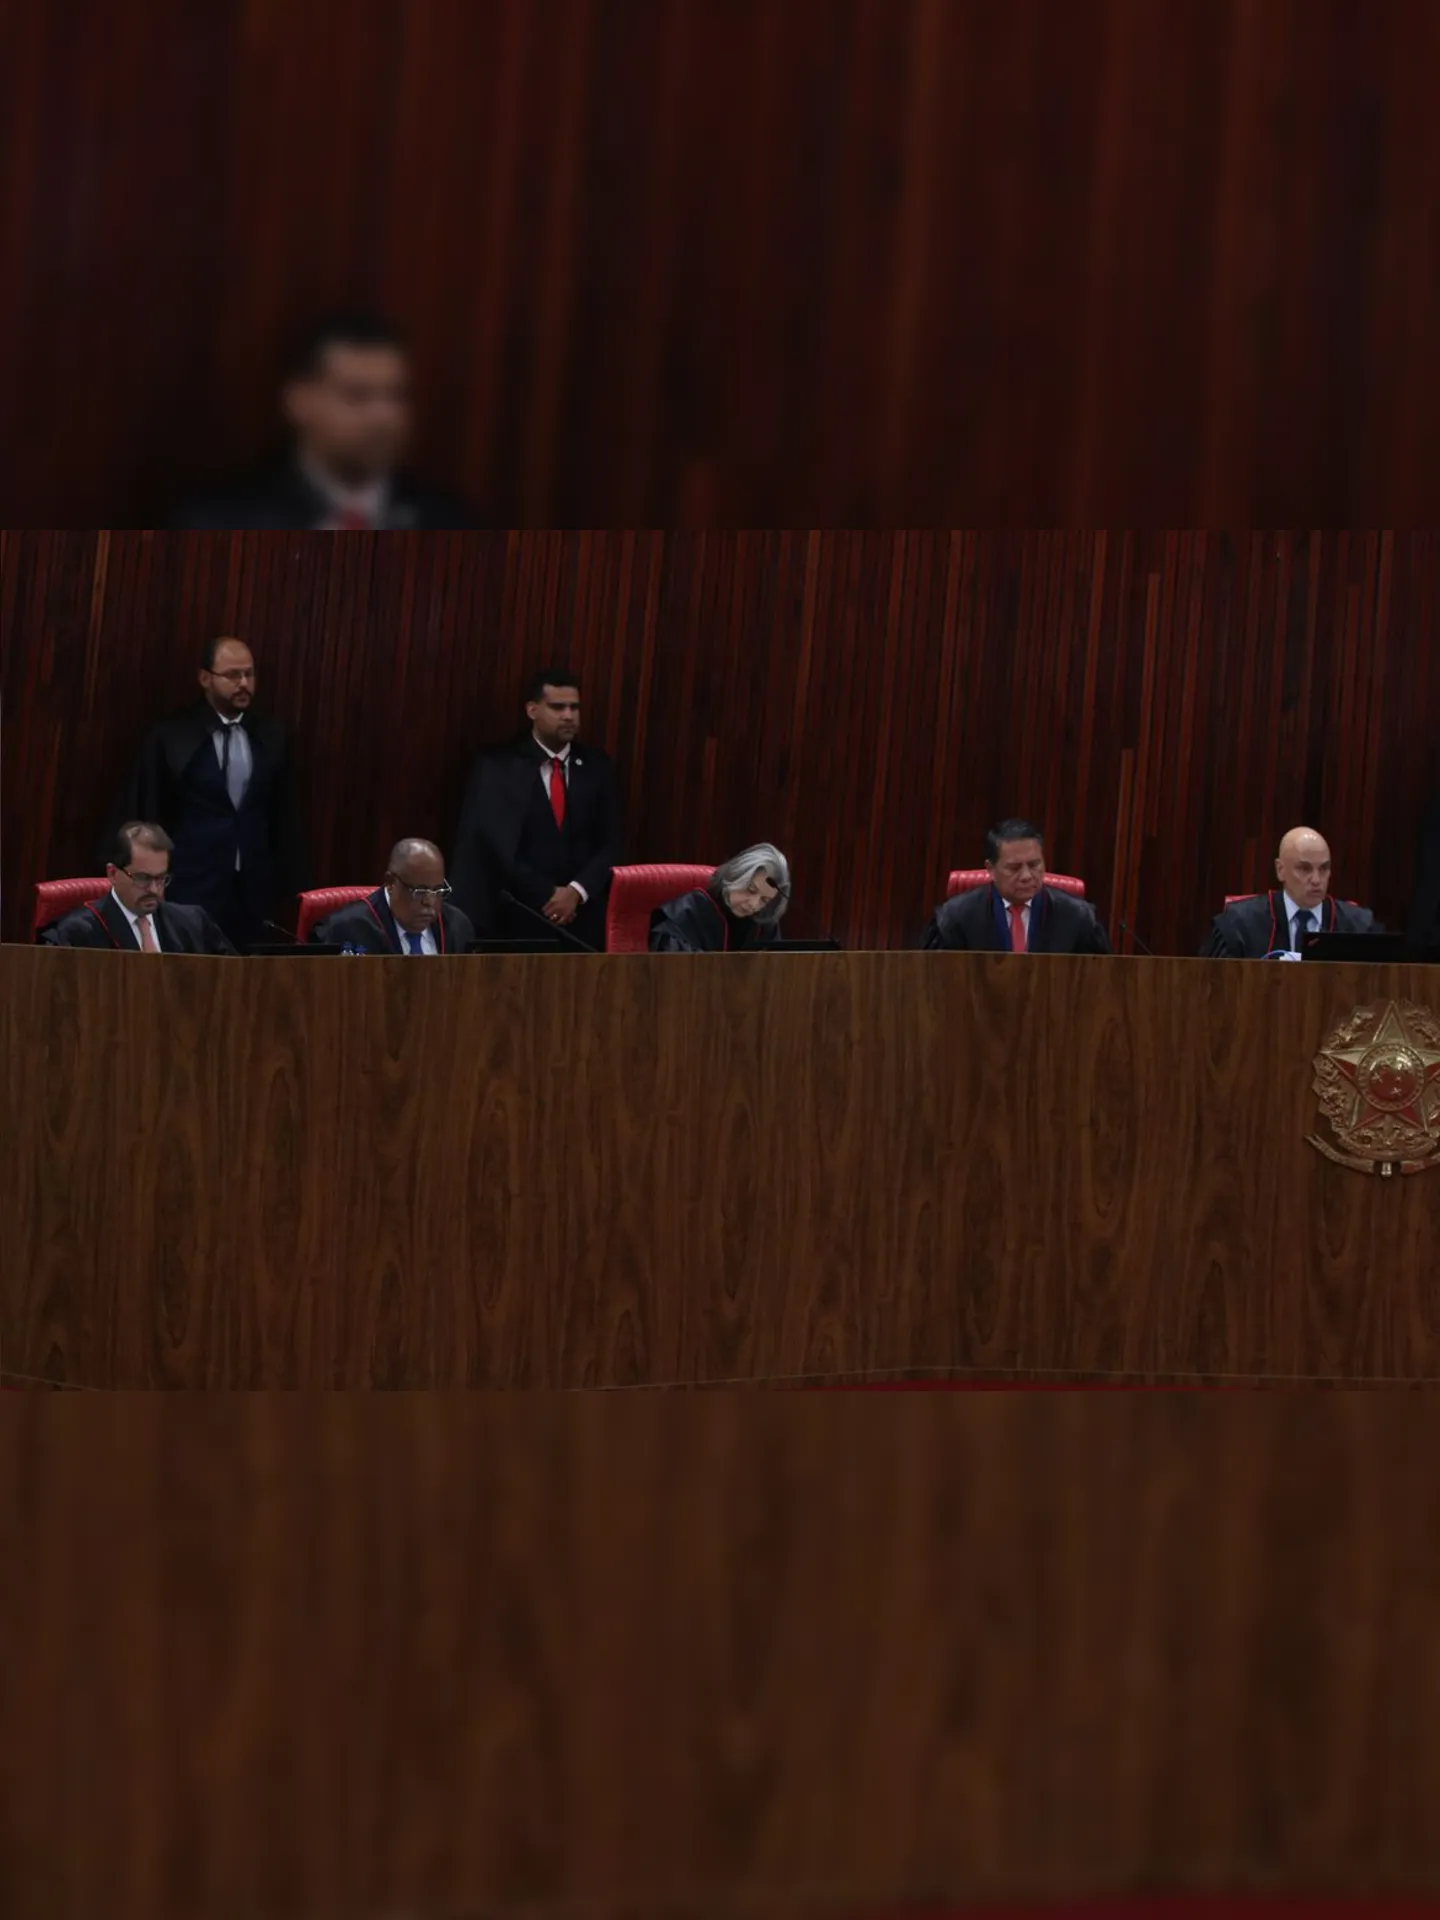 Ministros durante julgamento do ex-presidente no TSE